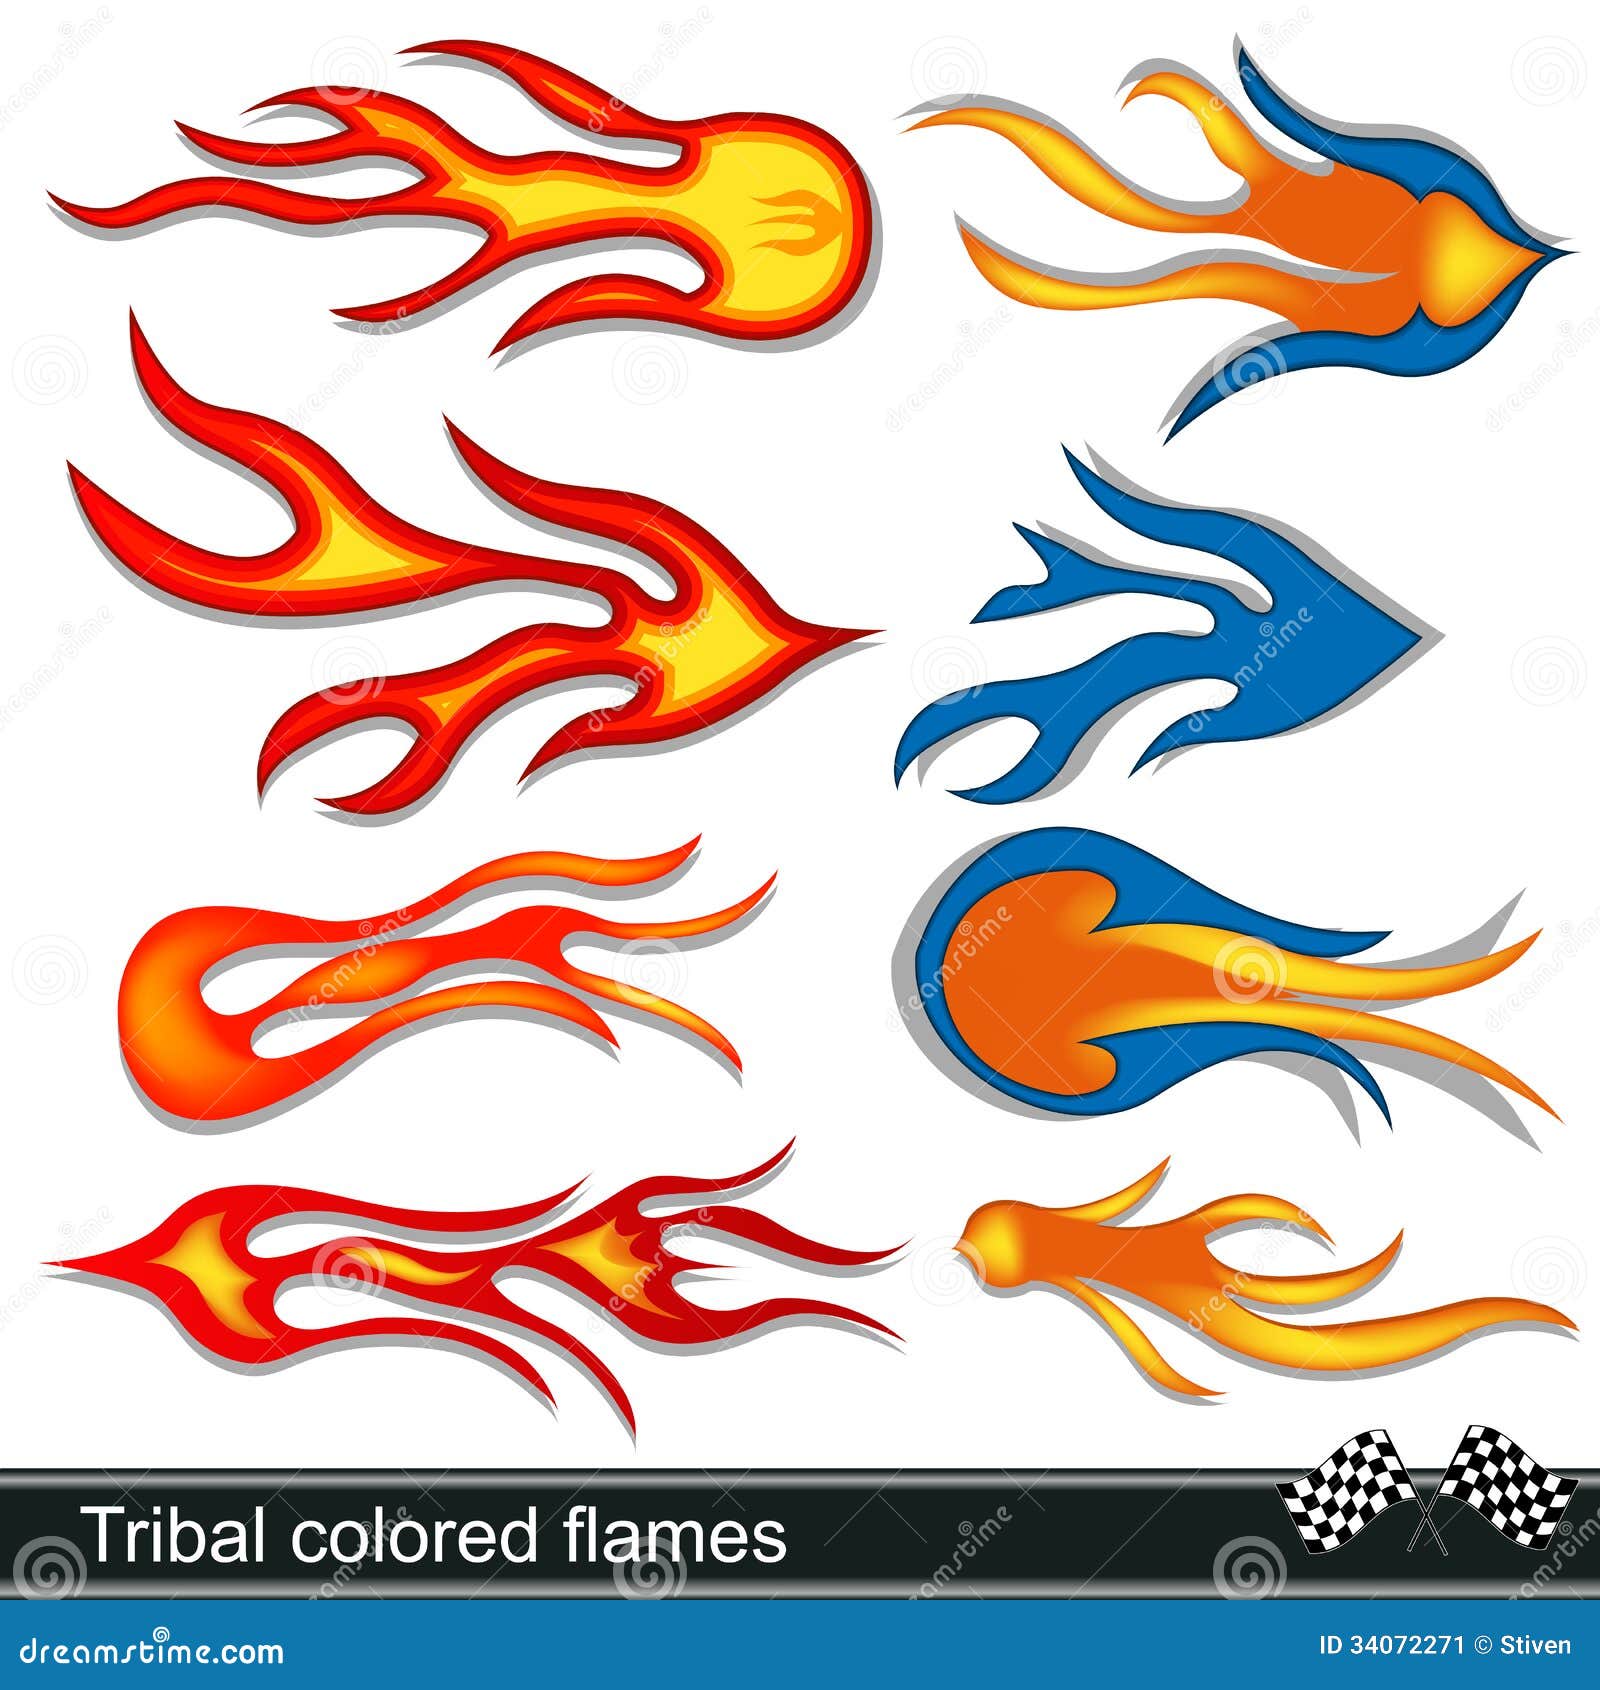 vector clipart tribal flames - photo #40